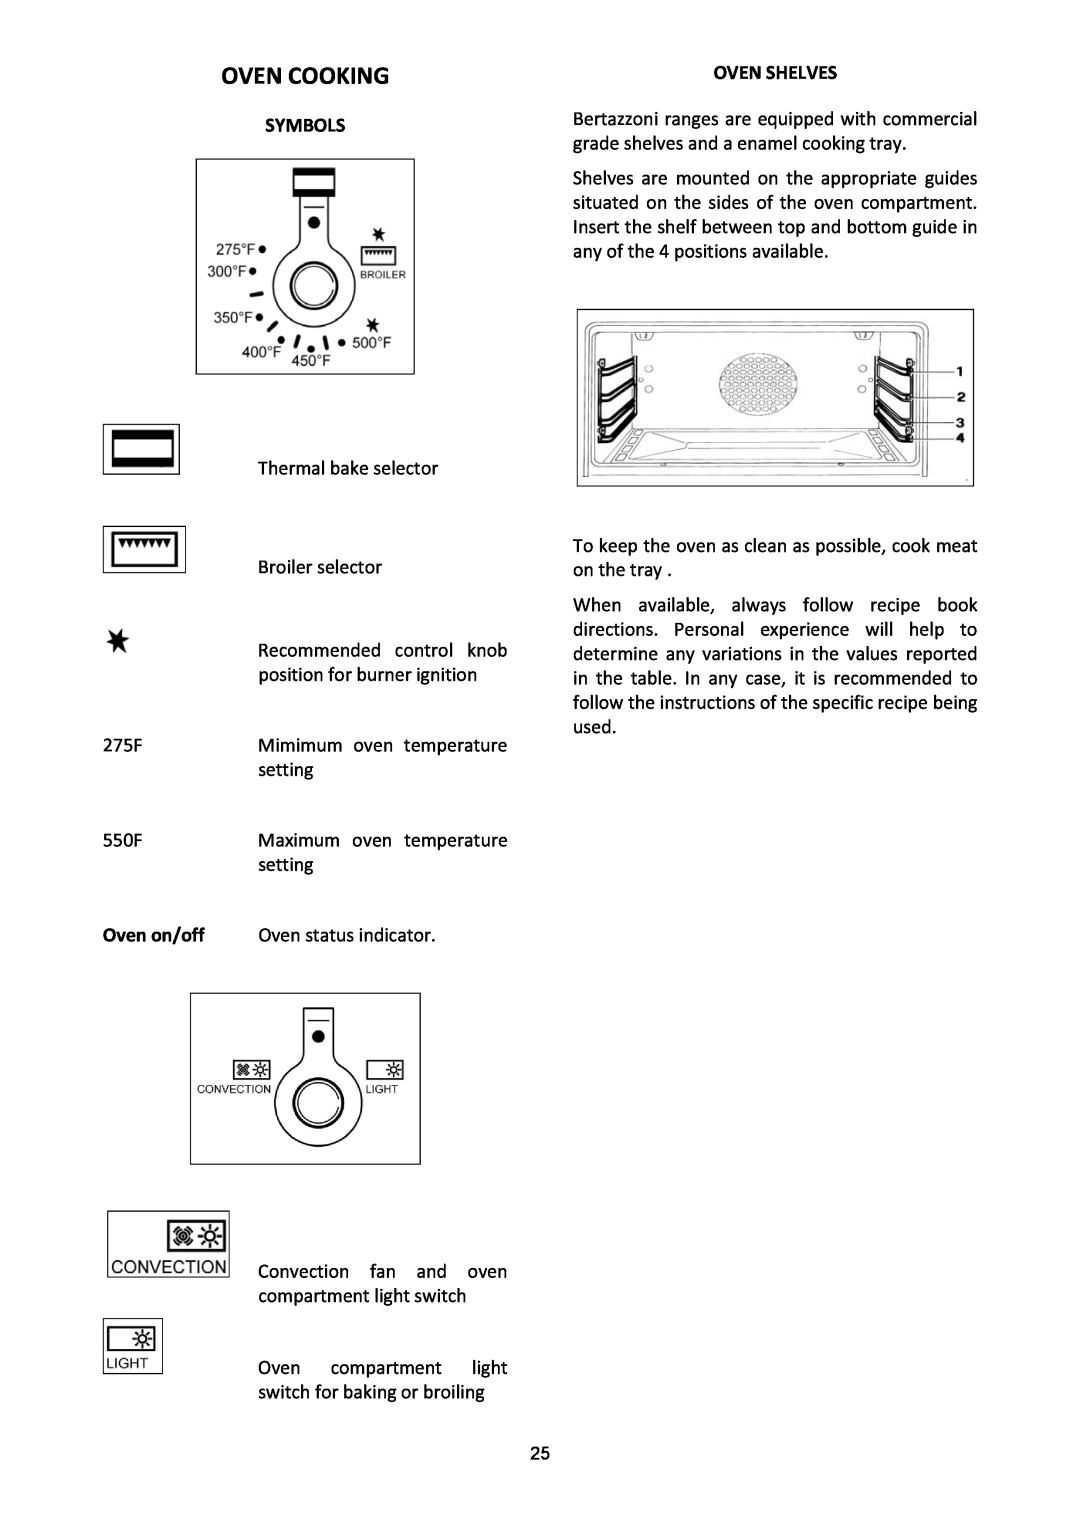 Bertazzoni X365GGVCR, X365GGVGI, X365GGVBI manual Oven Cooking, Oven on/off, Oven Shelves, Symbols 